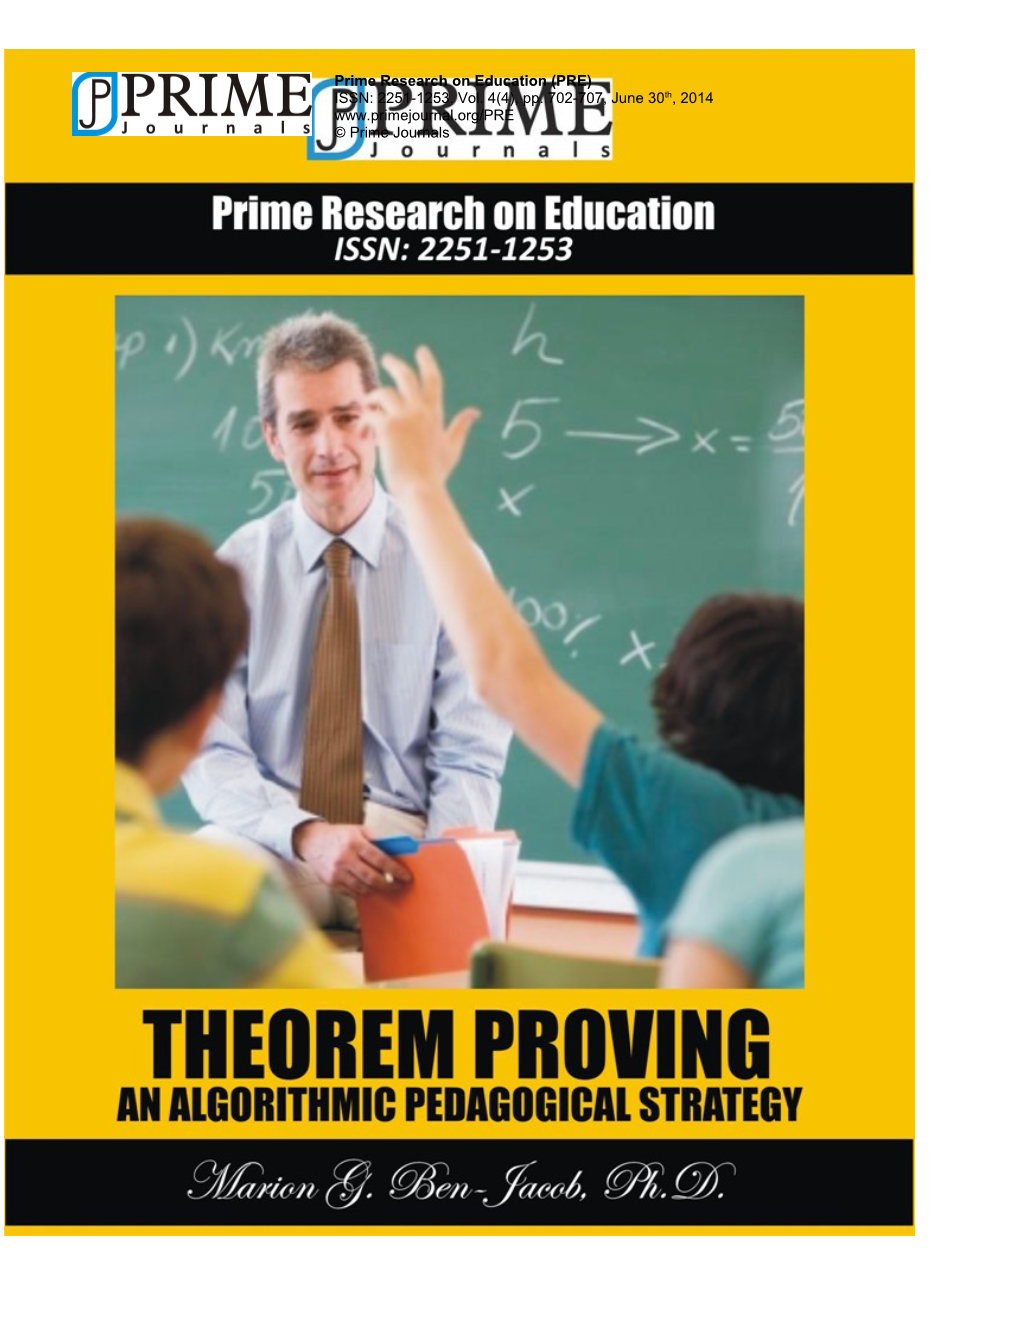 Theorem Proving: an Algorithmic Pedagogical Strategy